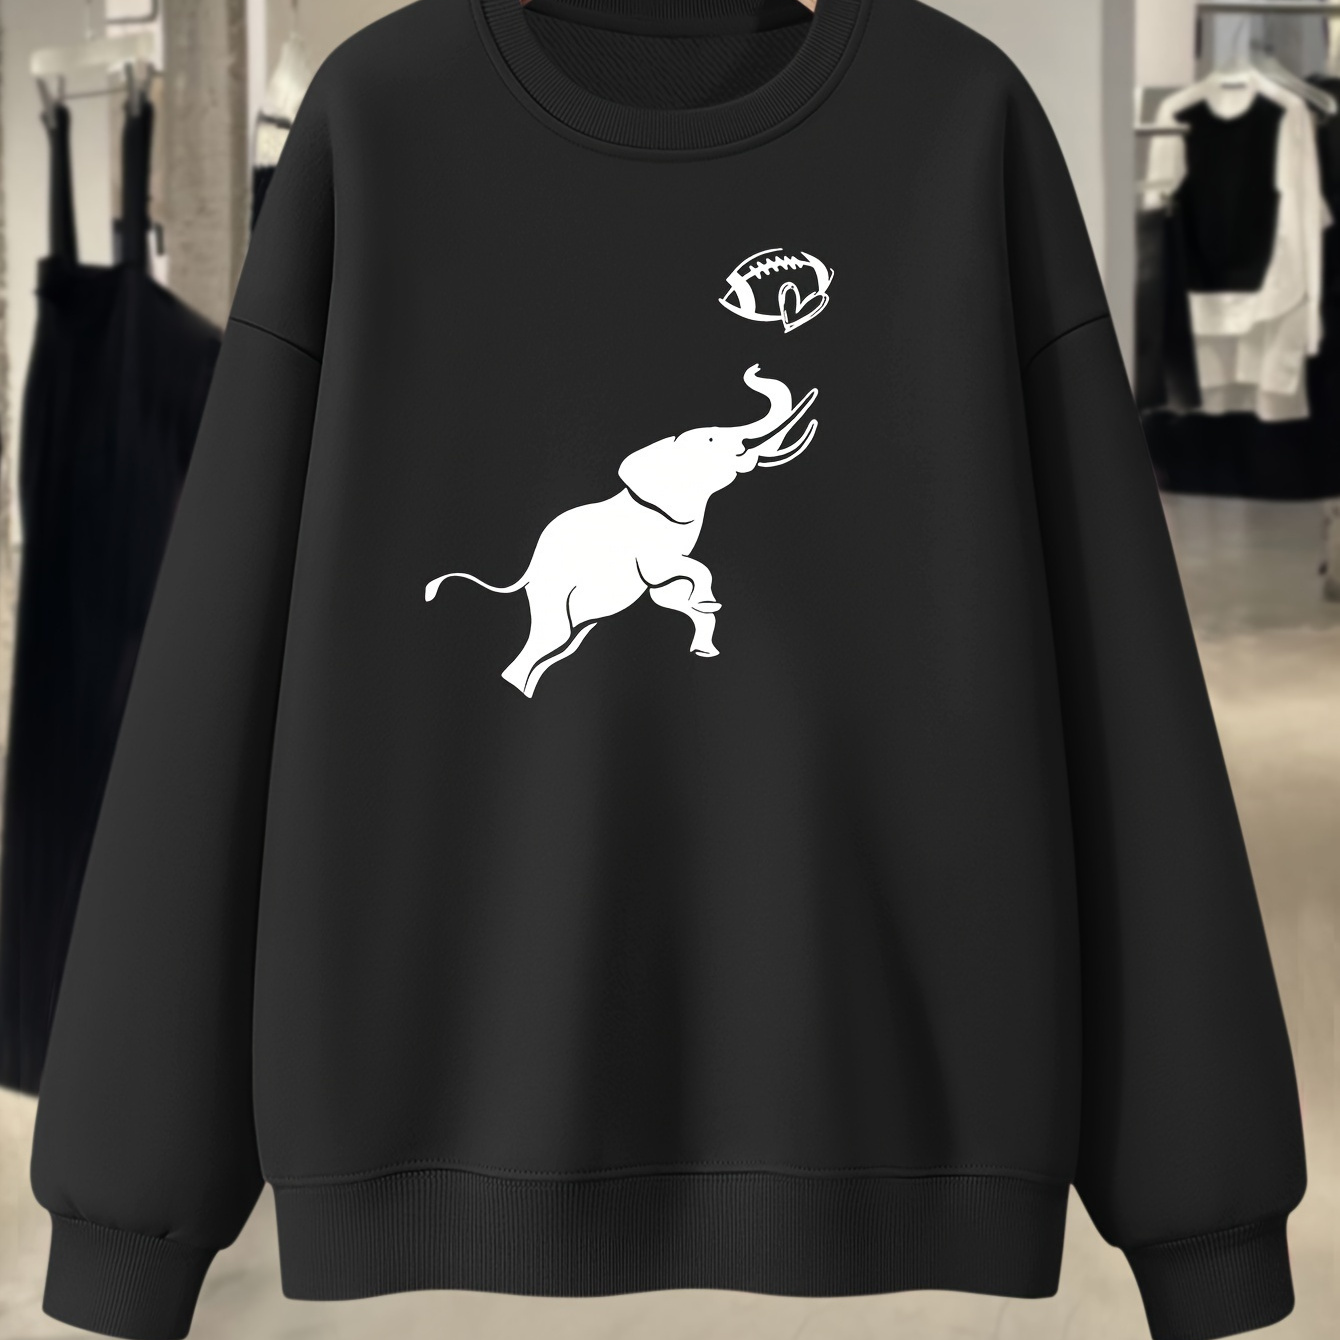 

Plus Size Elephant Graphic Print Sweatshirt, Crew Neck Casual Sweatshirt For Fall & Spring, Women's Plus Size Clothing